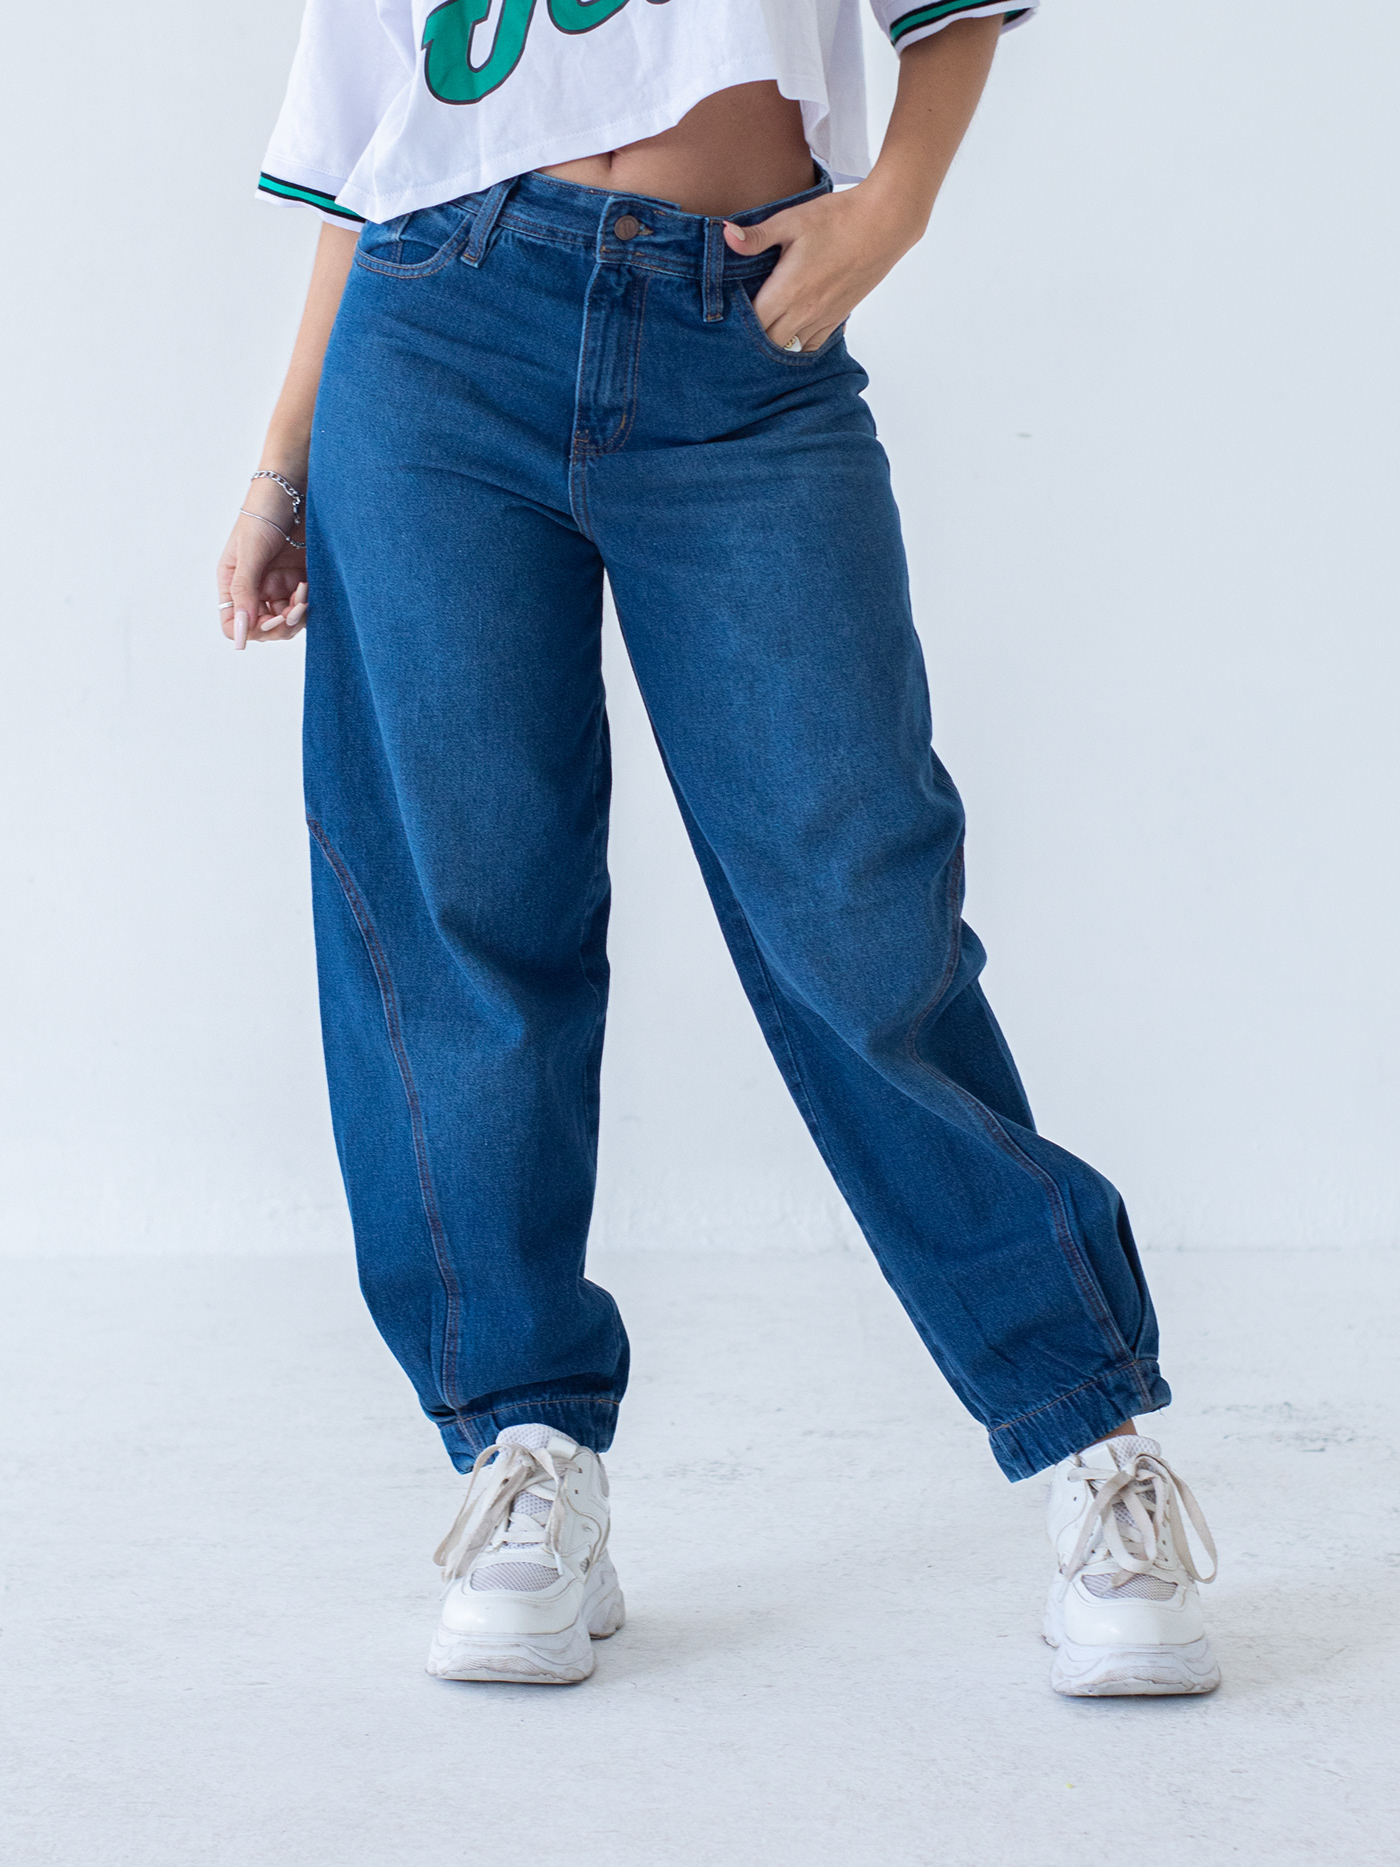 jeans moda Photography  model INFLUENCER Socialmedia